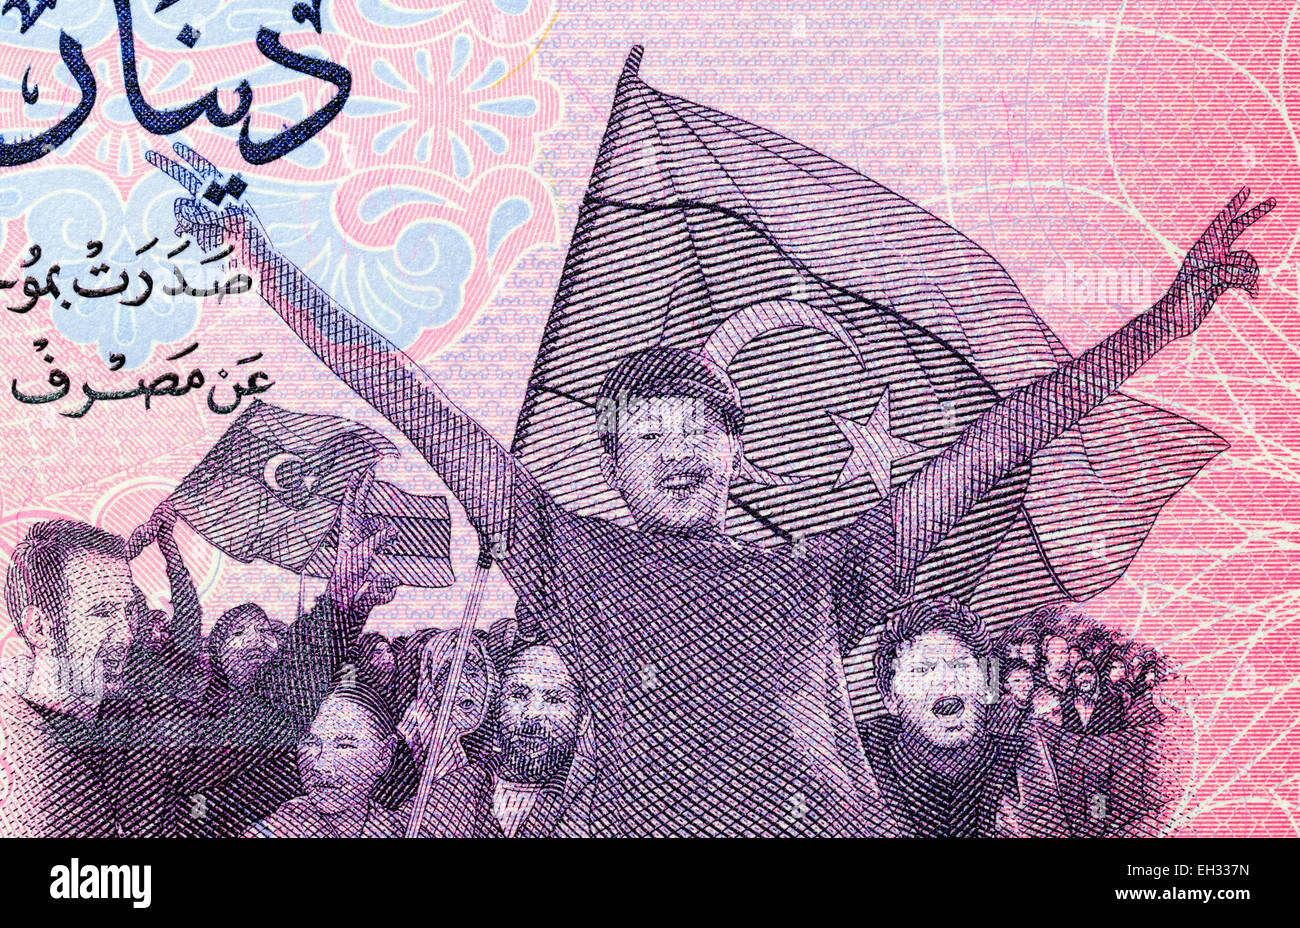 Anti-Gaddafi protesters from 1 dinar banknote, Libya, 2013 Stock Photo